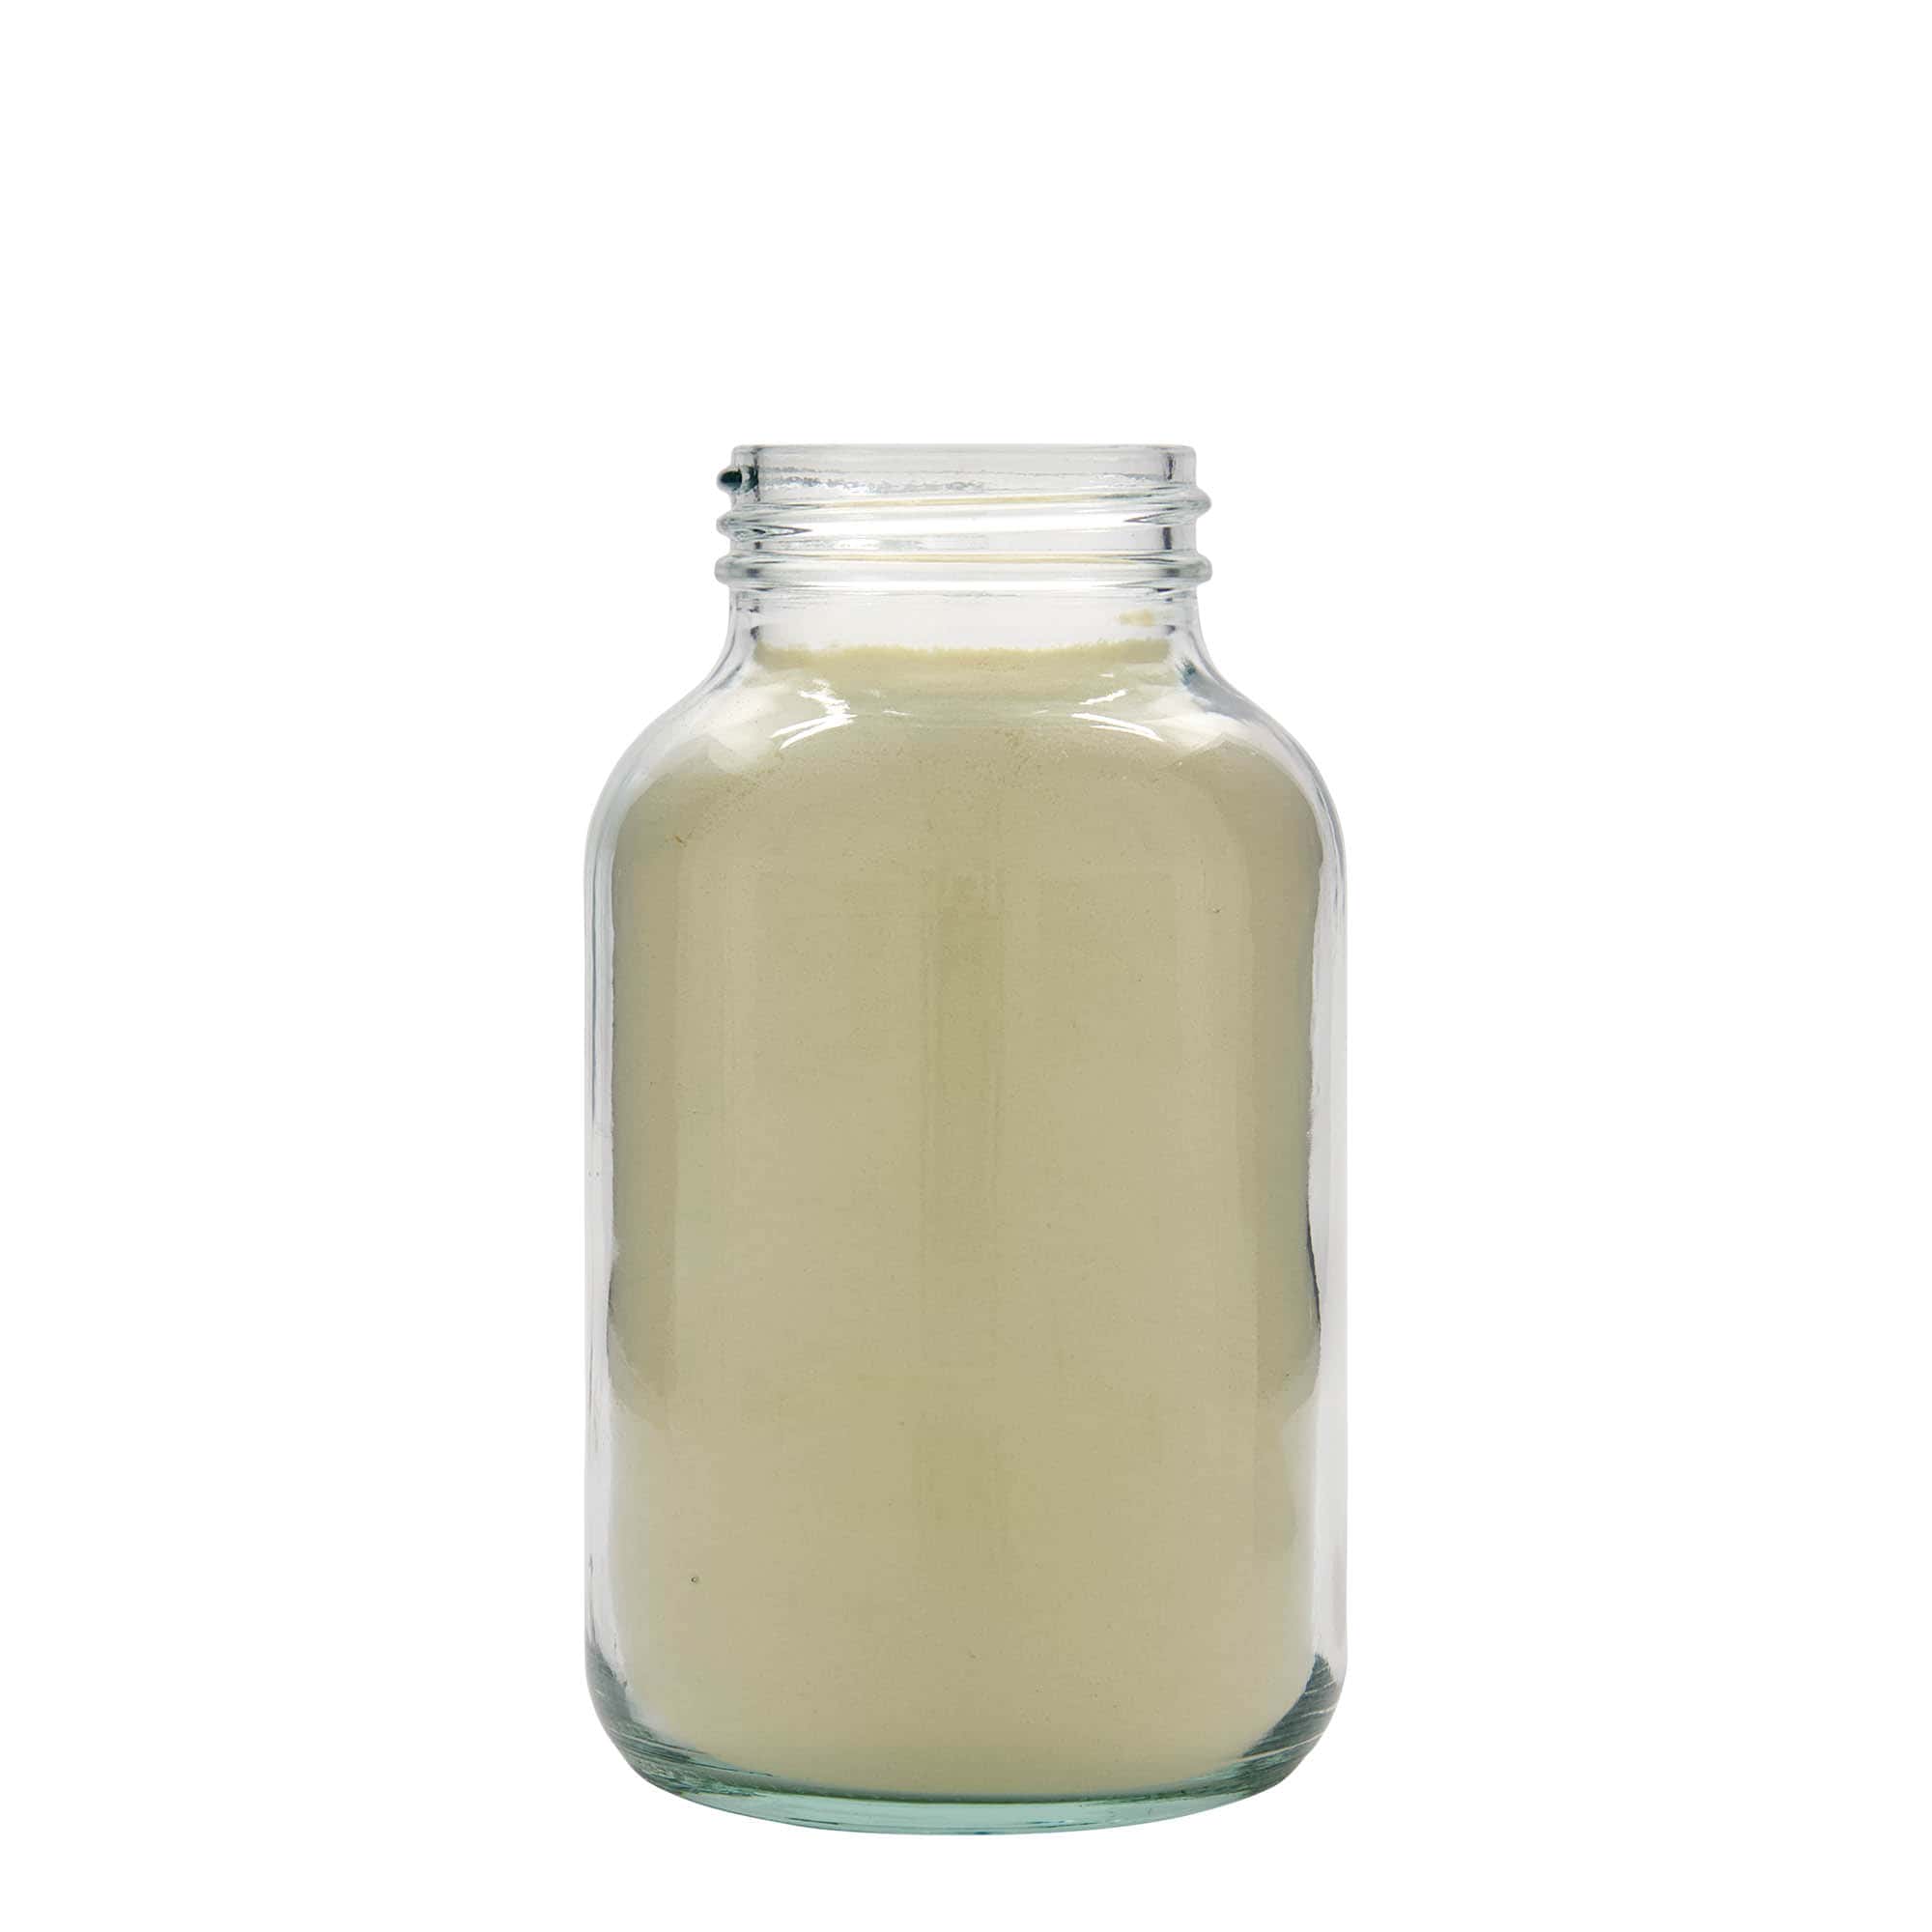 1,000 ml wide mouth jar, closure: DIN 68